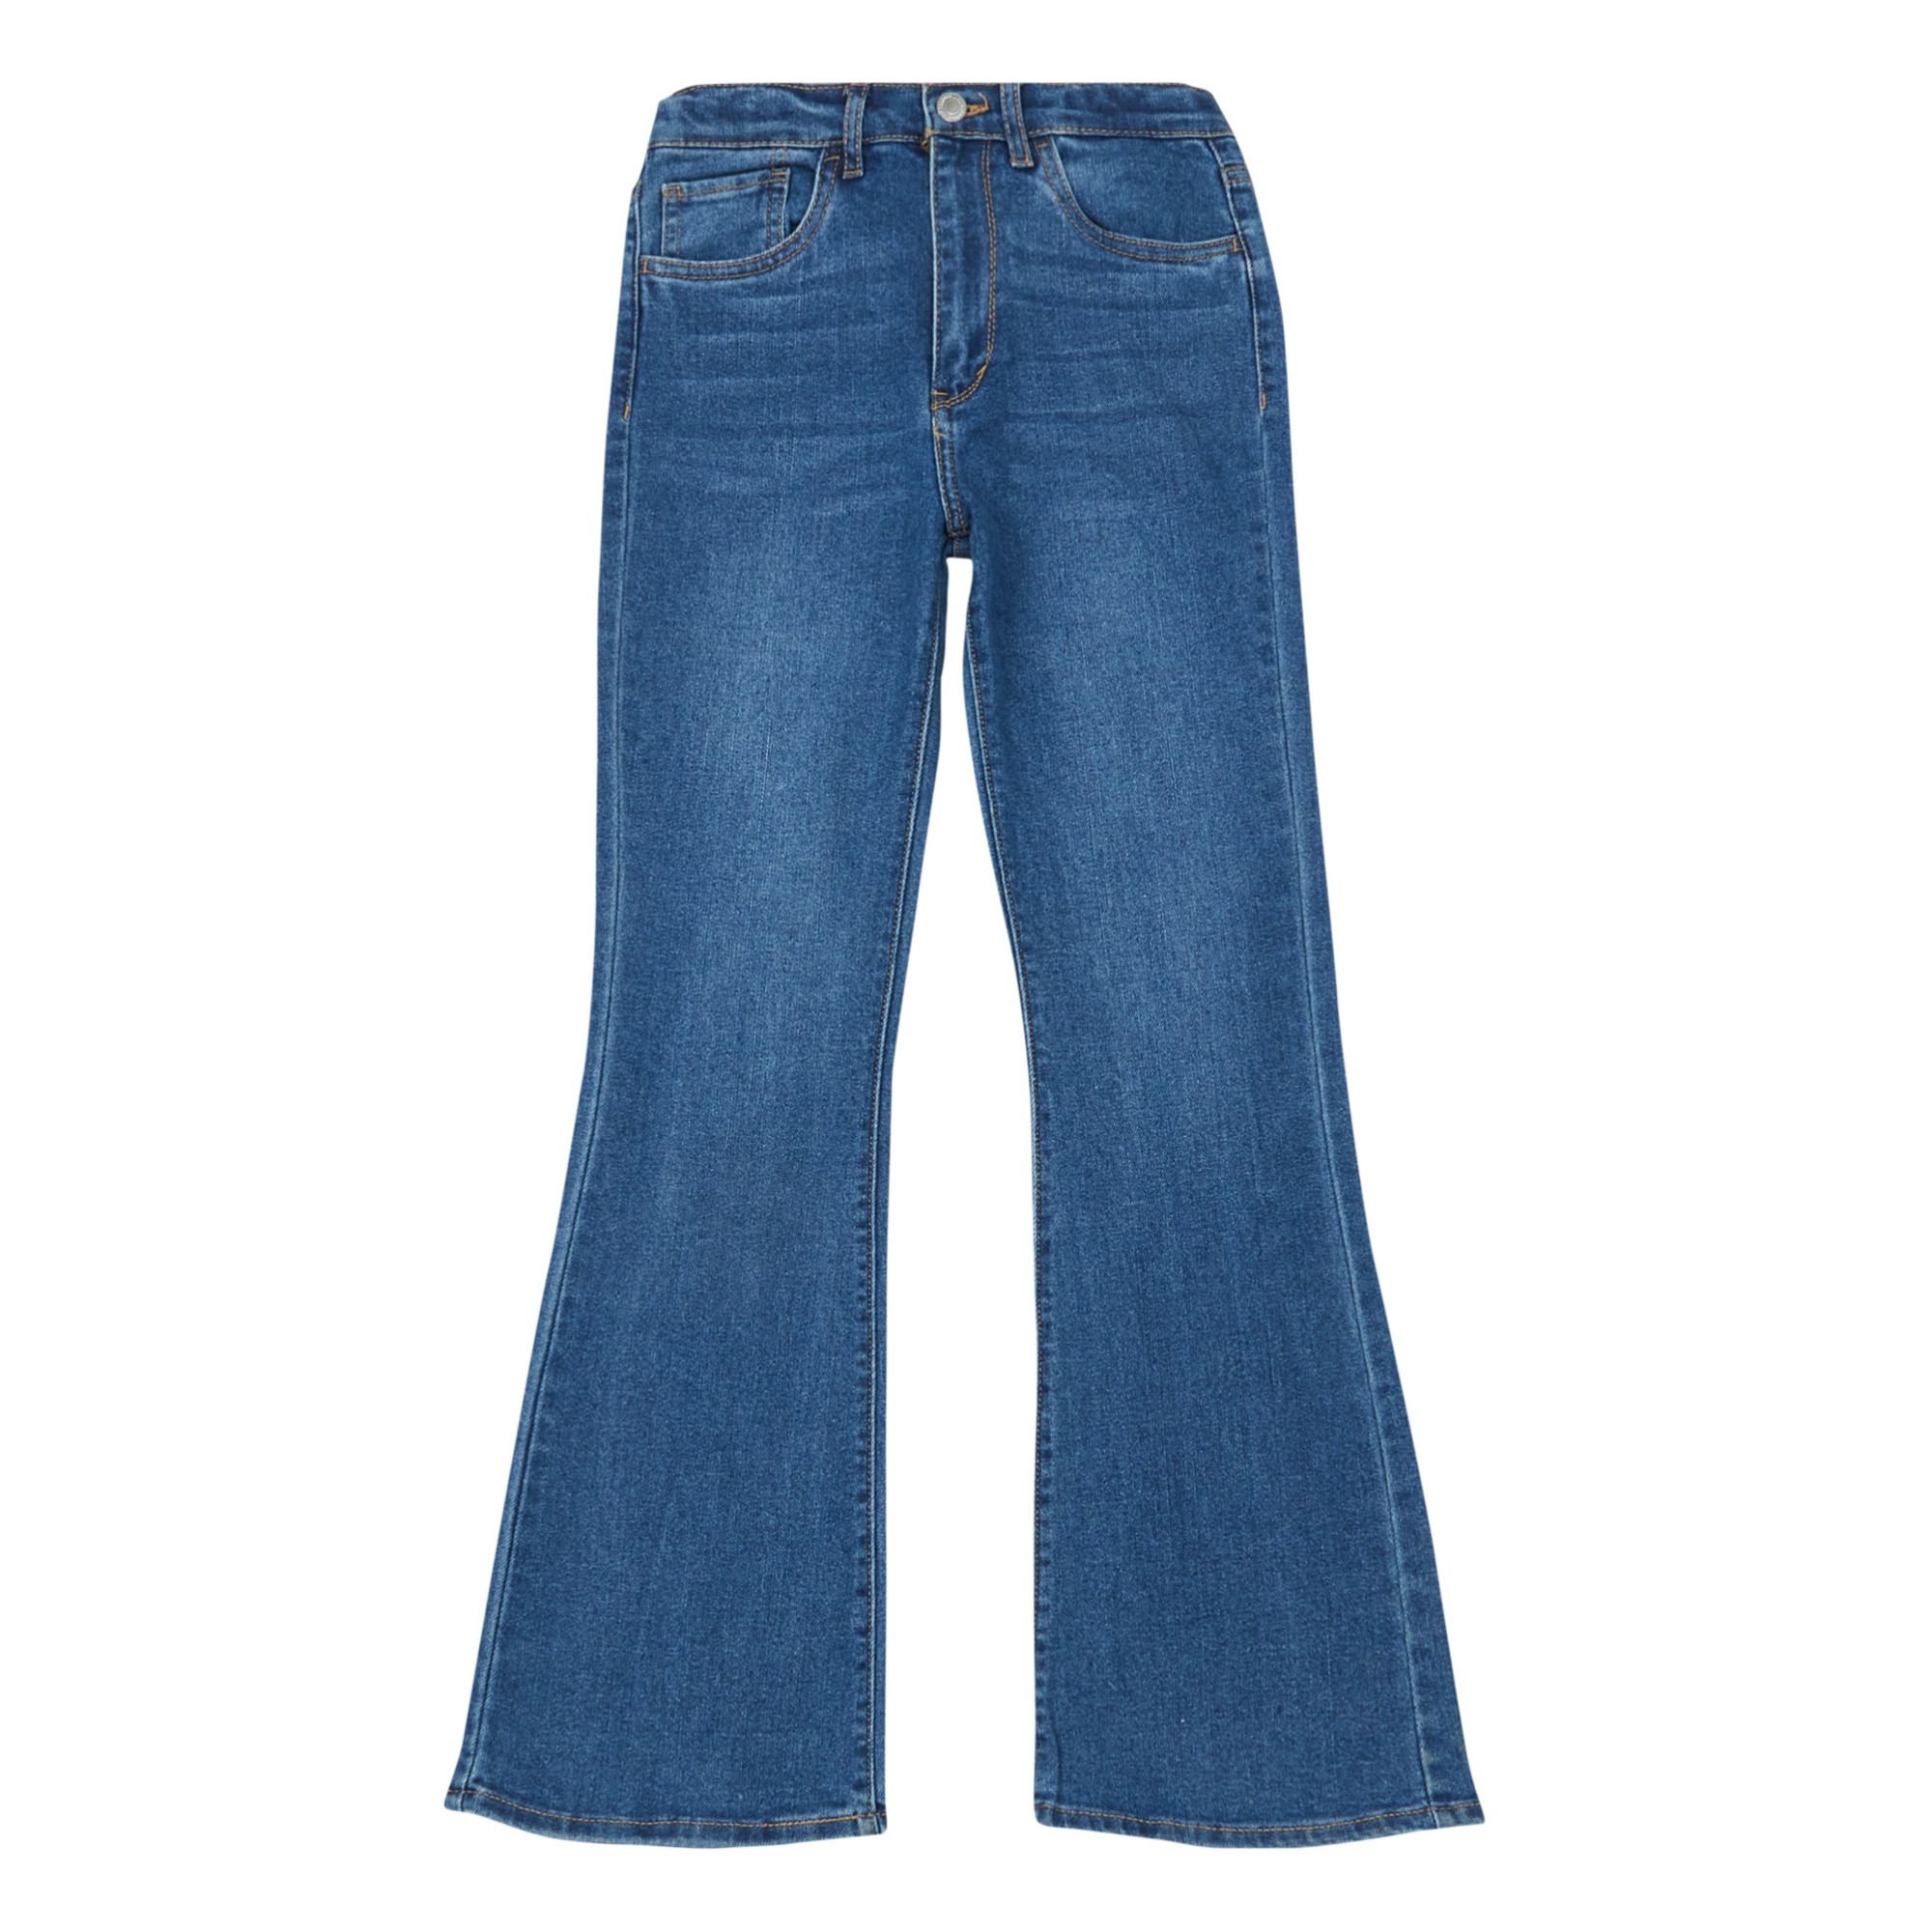 Levi's - Jean Taille Haute Flare - Fille - Bleu jean